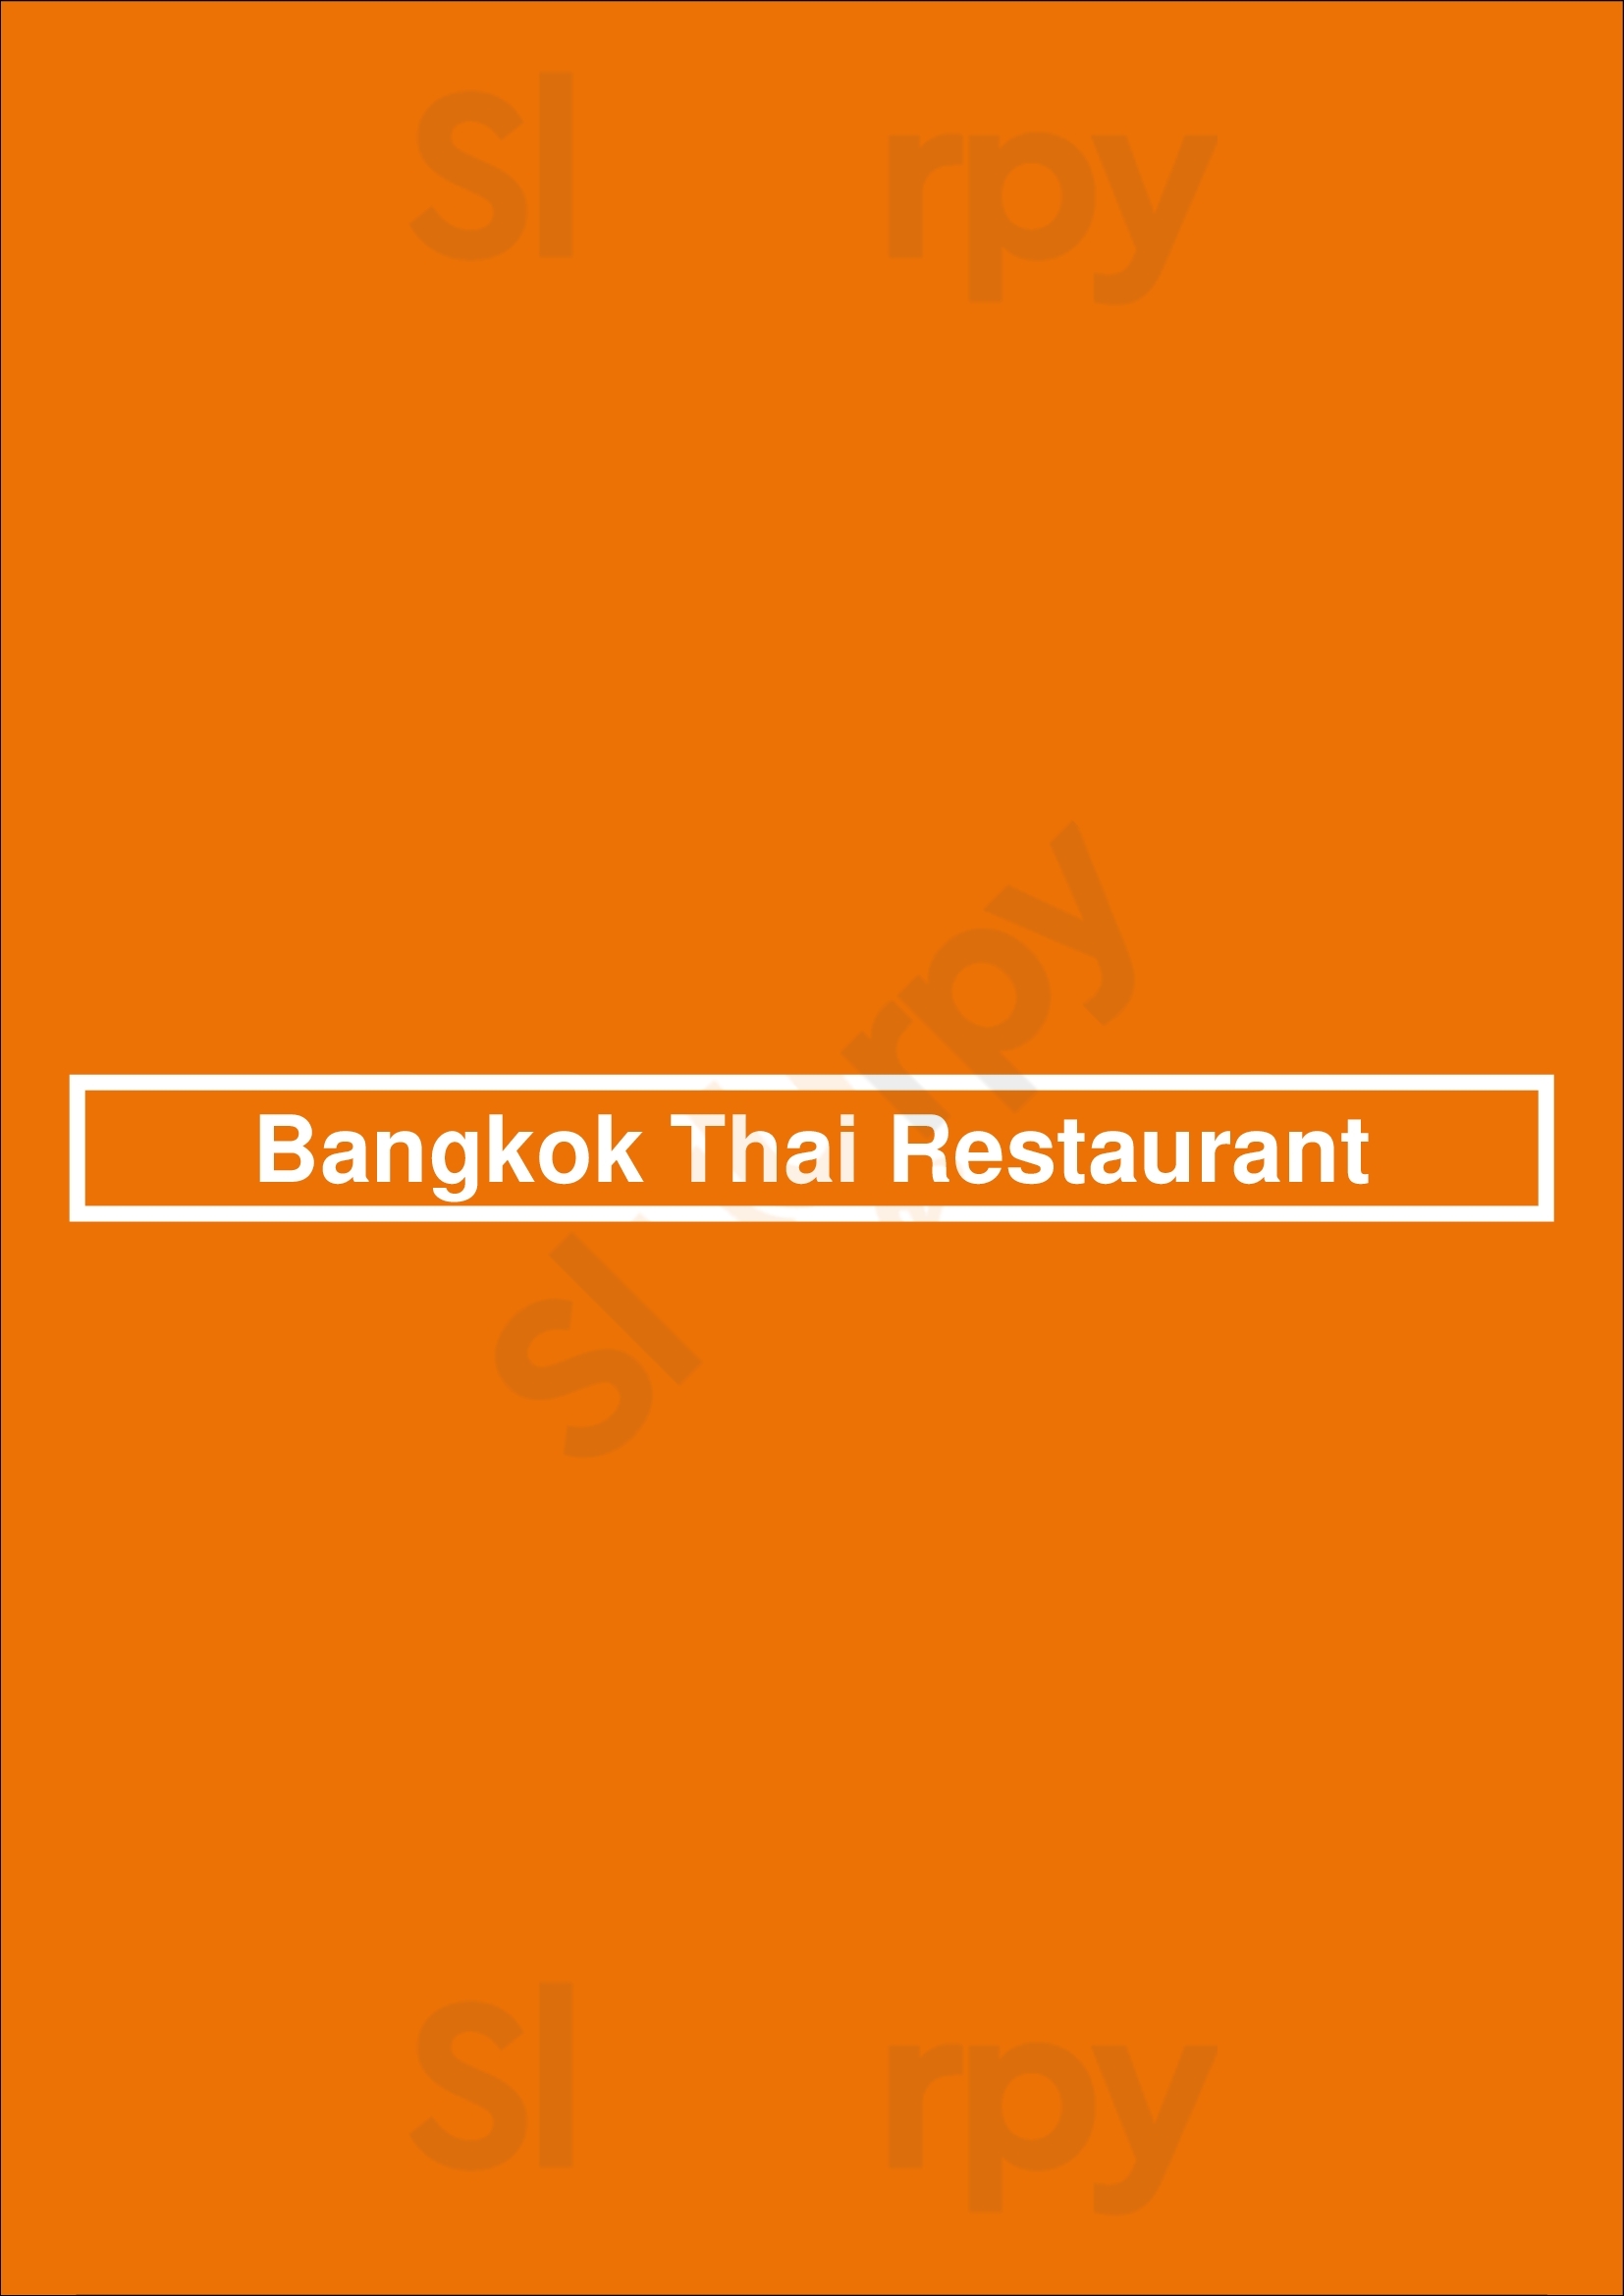 Bangkok Thai Restaurant Winnipeg Menu - 1